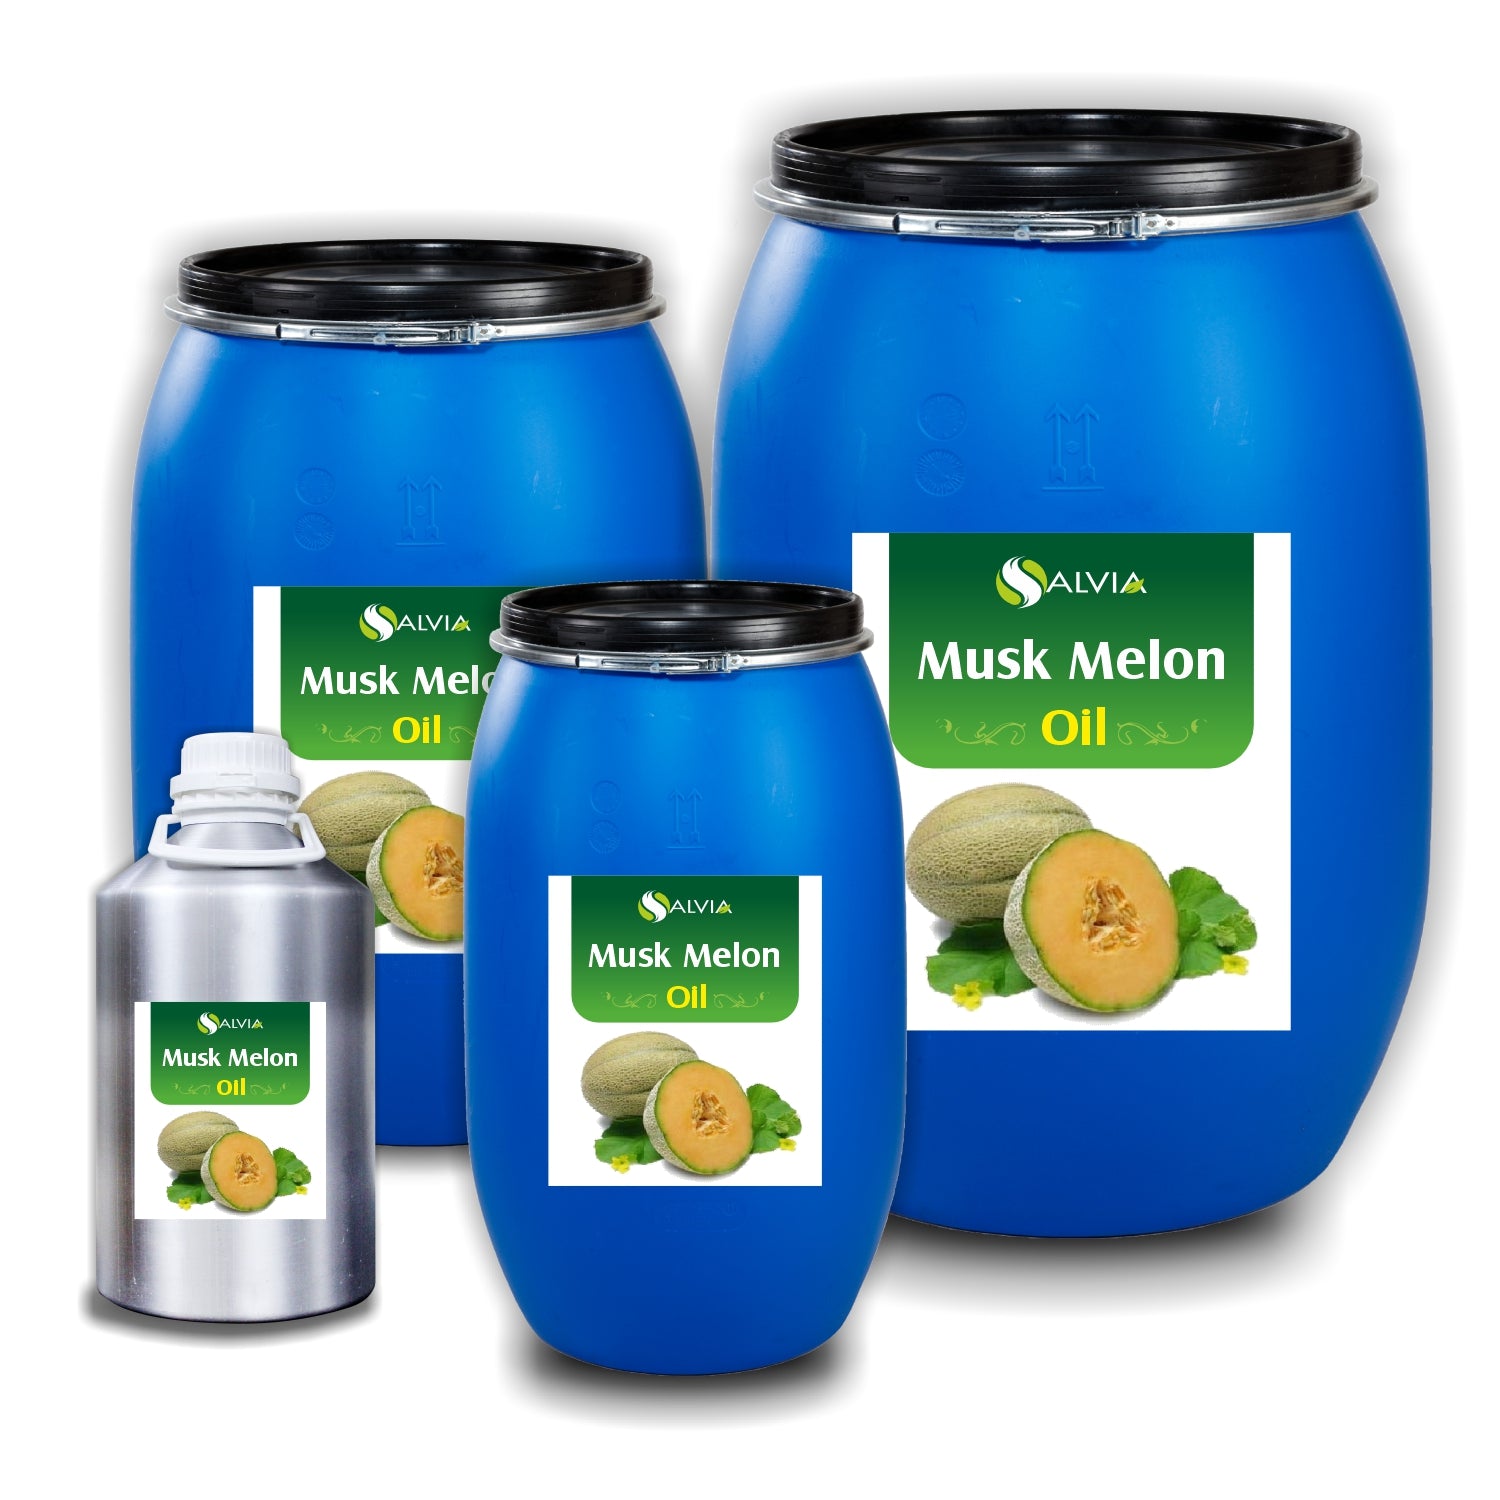 Salvia Natural Carrier Oils 10kg Musk Melon Oil